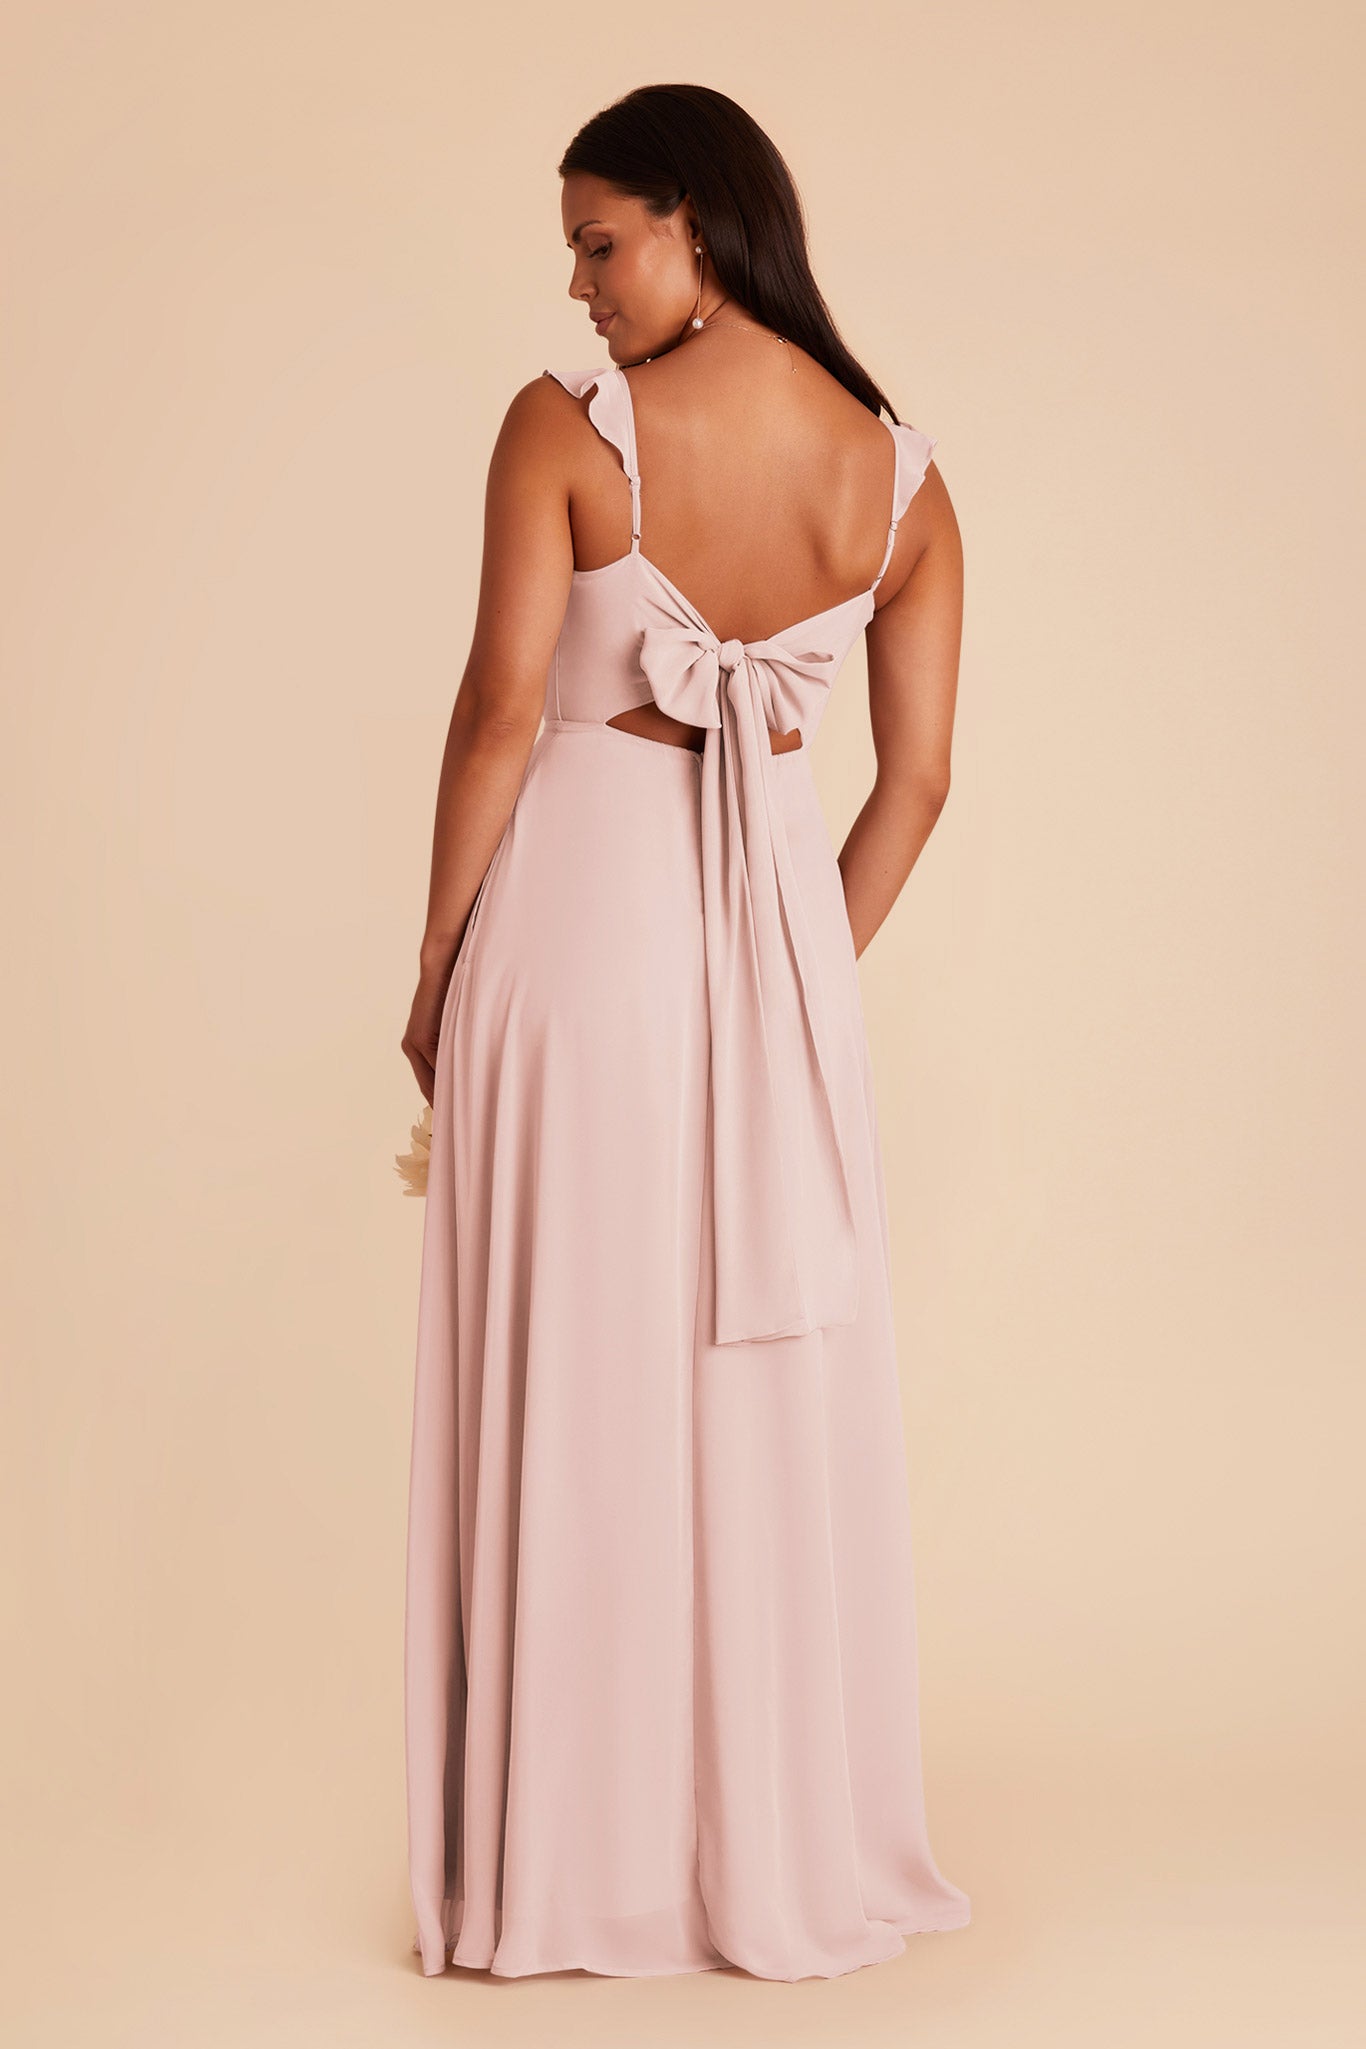 Blush Pink Doris Chiffon Dress by Birdy Grey